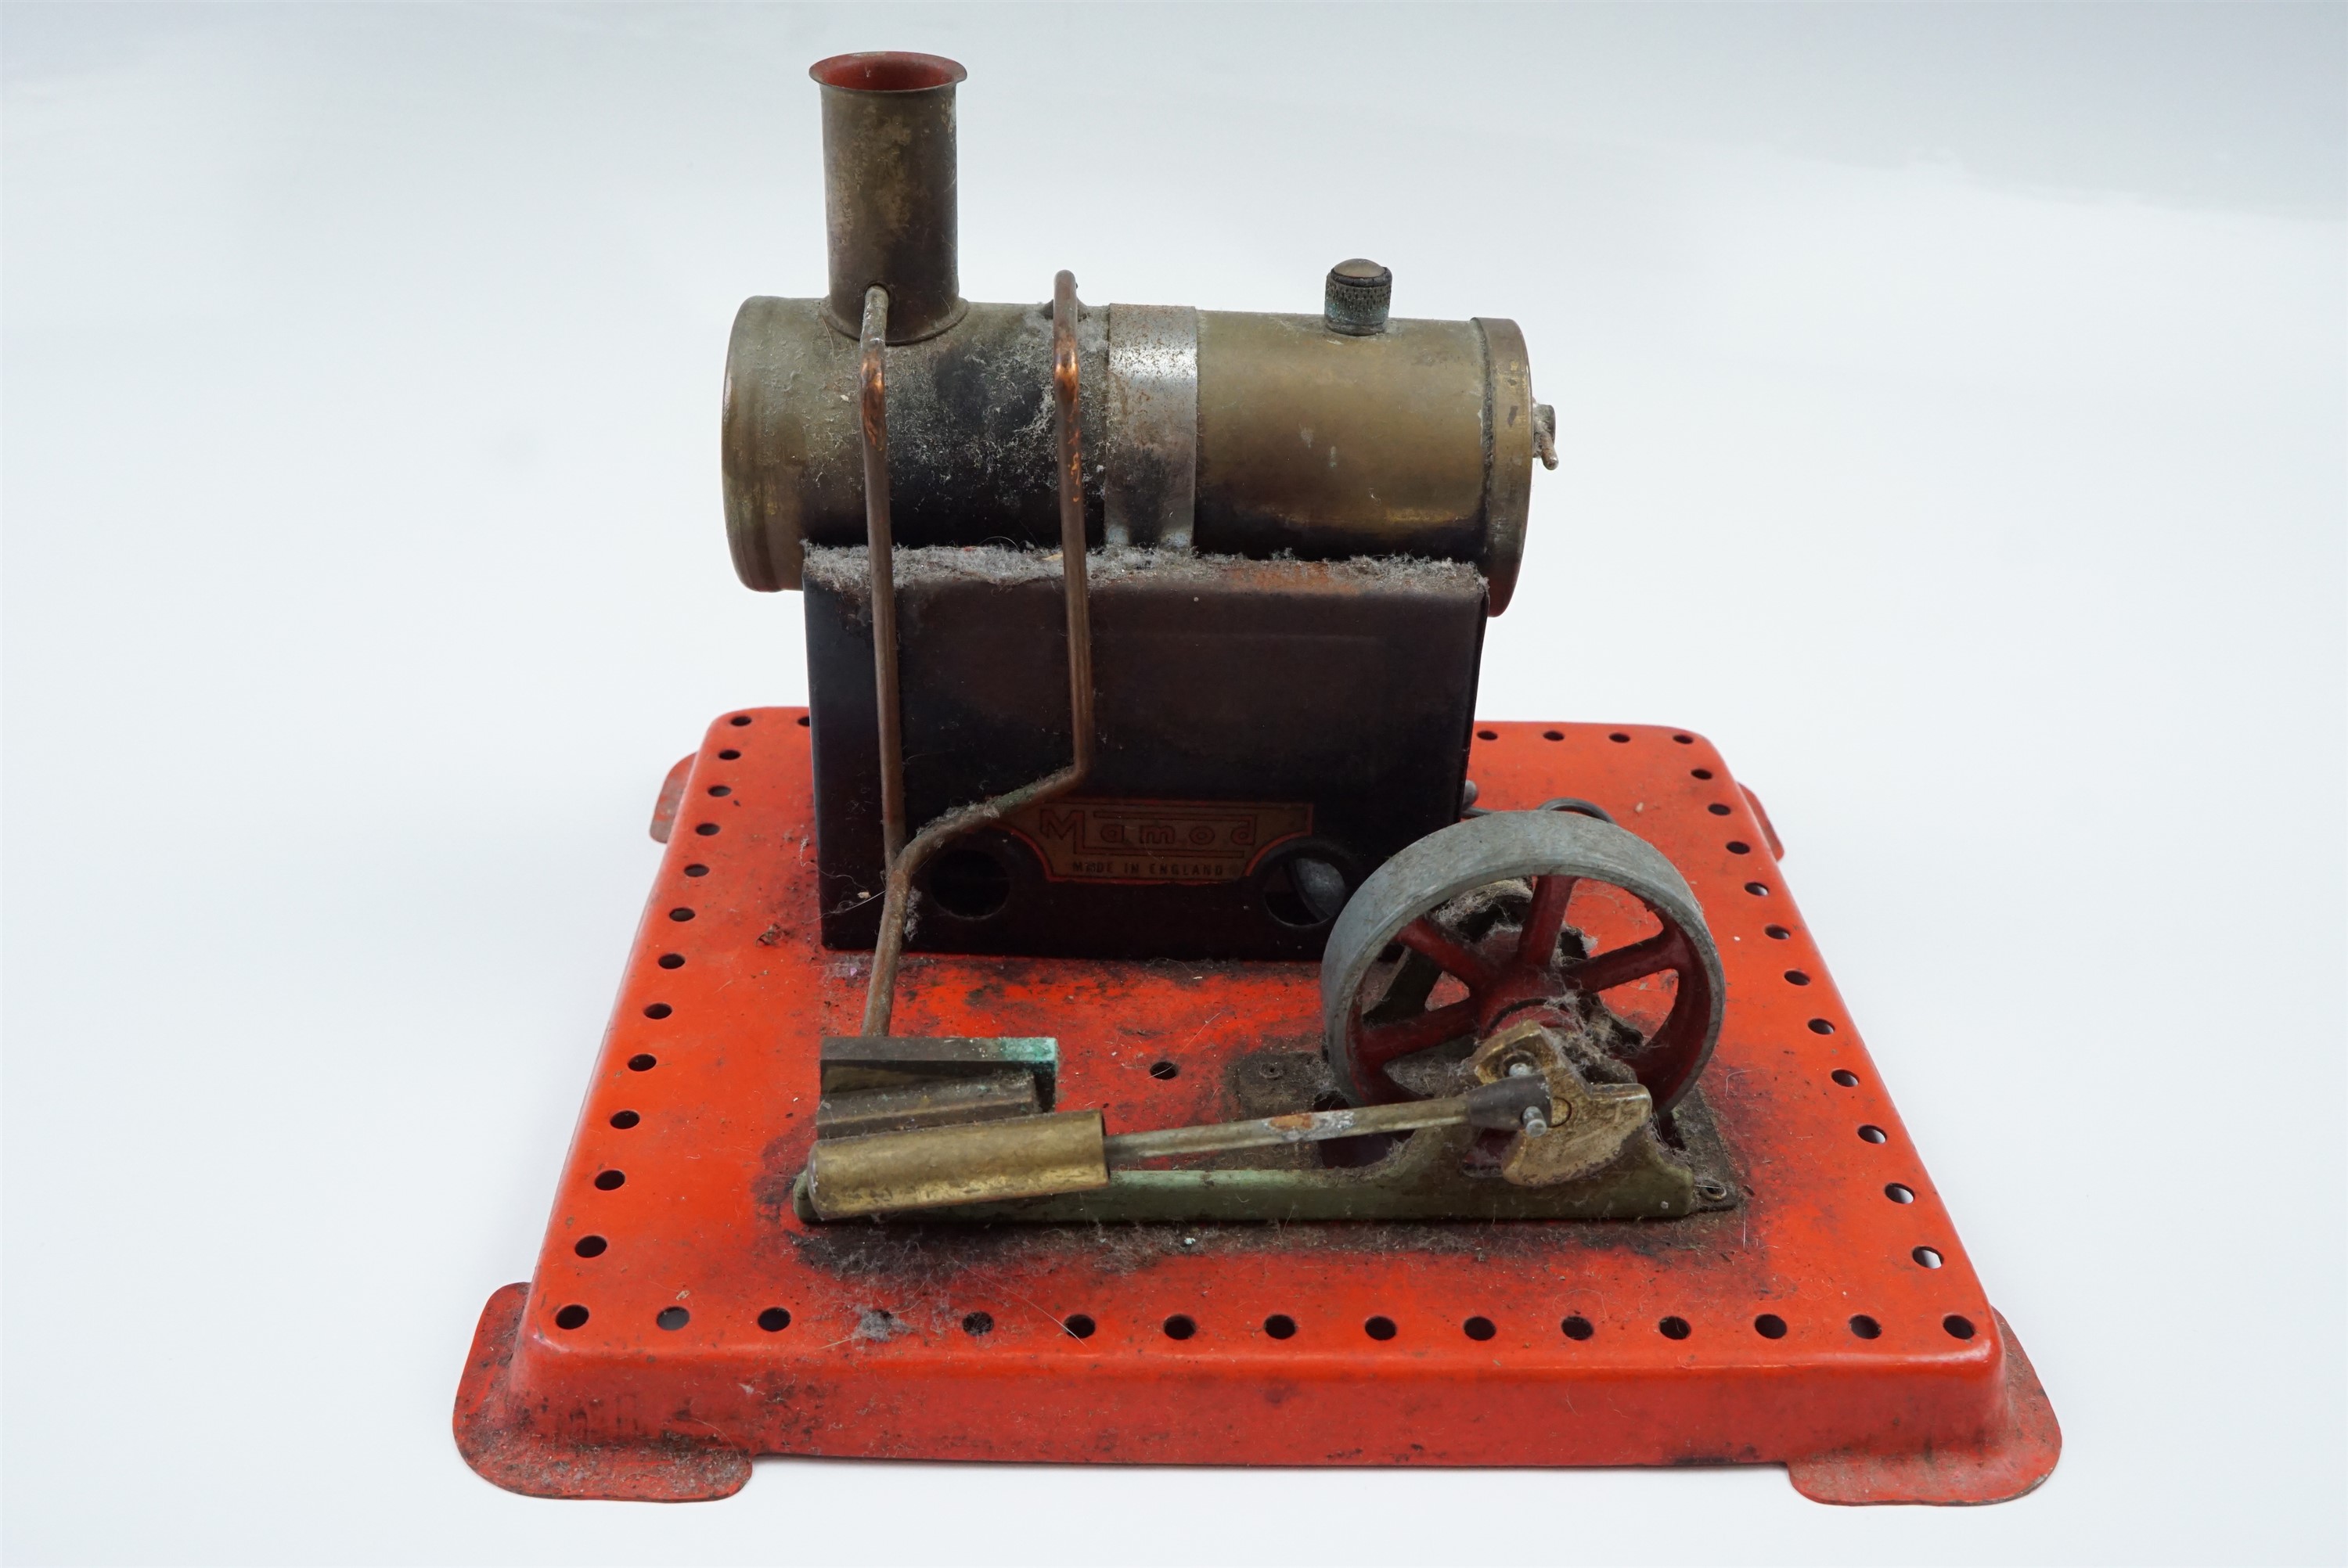 A vintage Mamod live steam toy stationary engine, 20 cm x 18 cm base